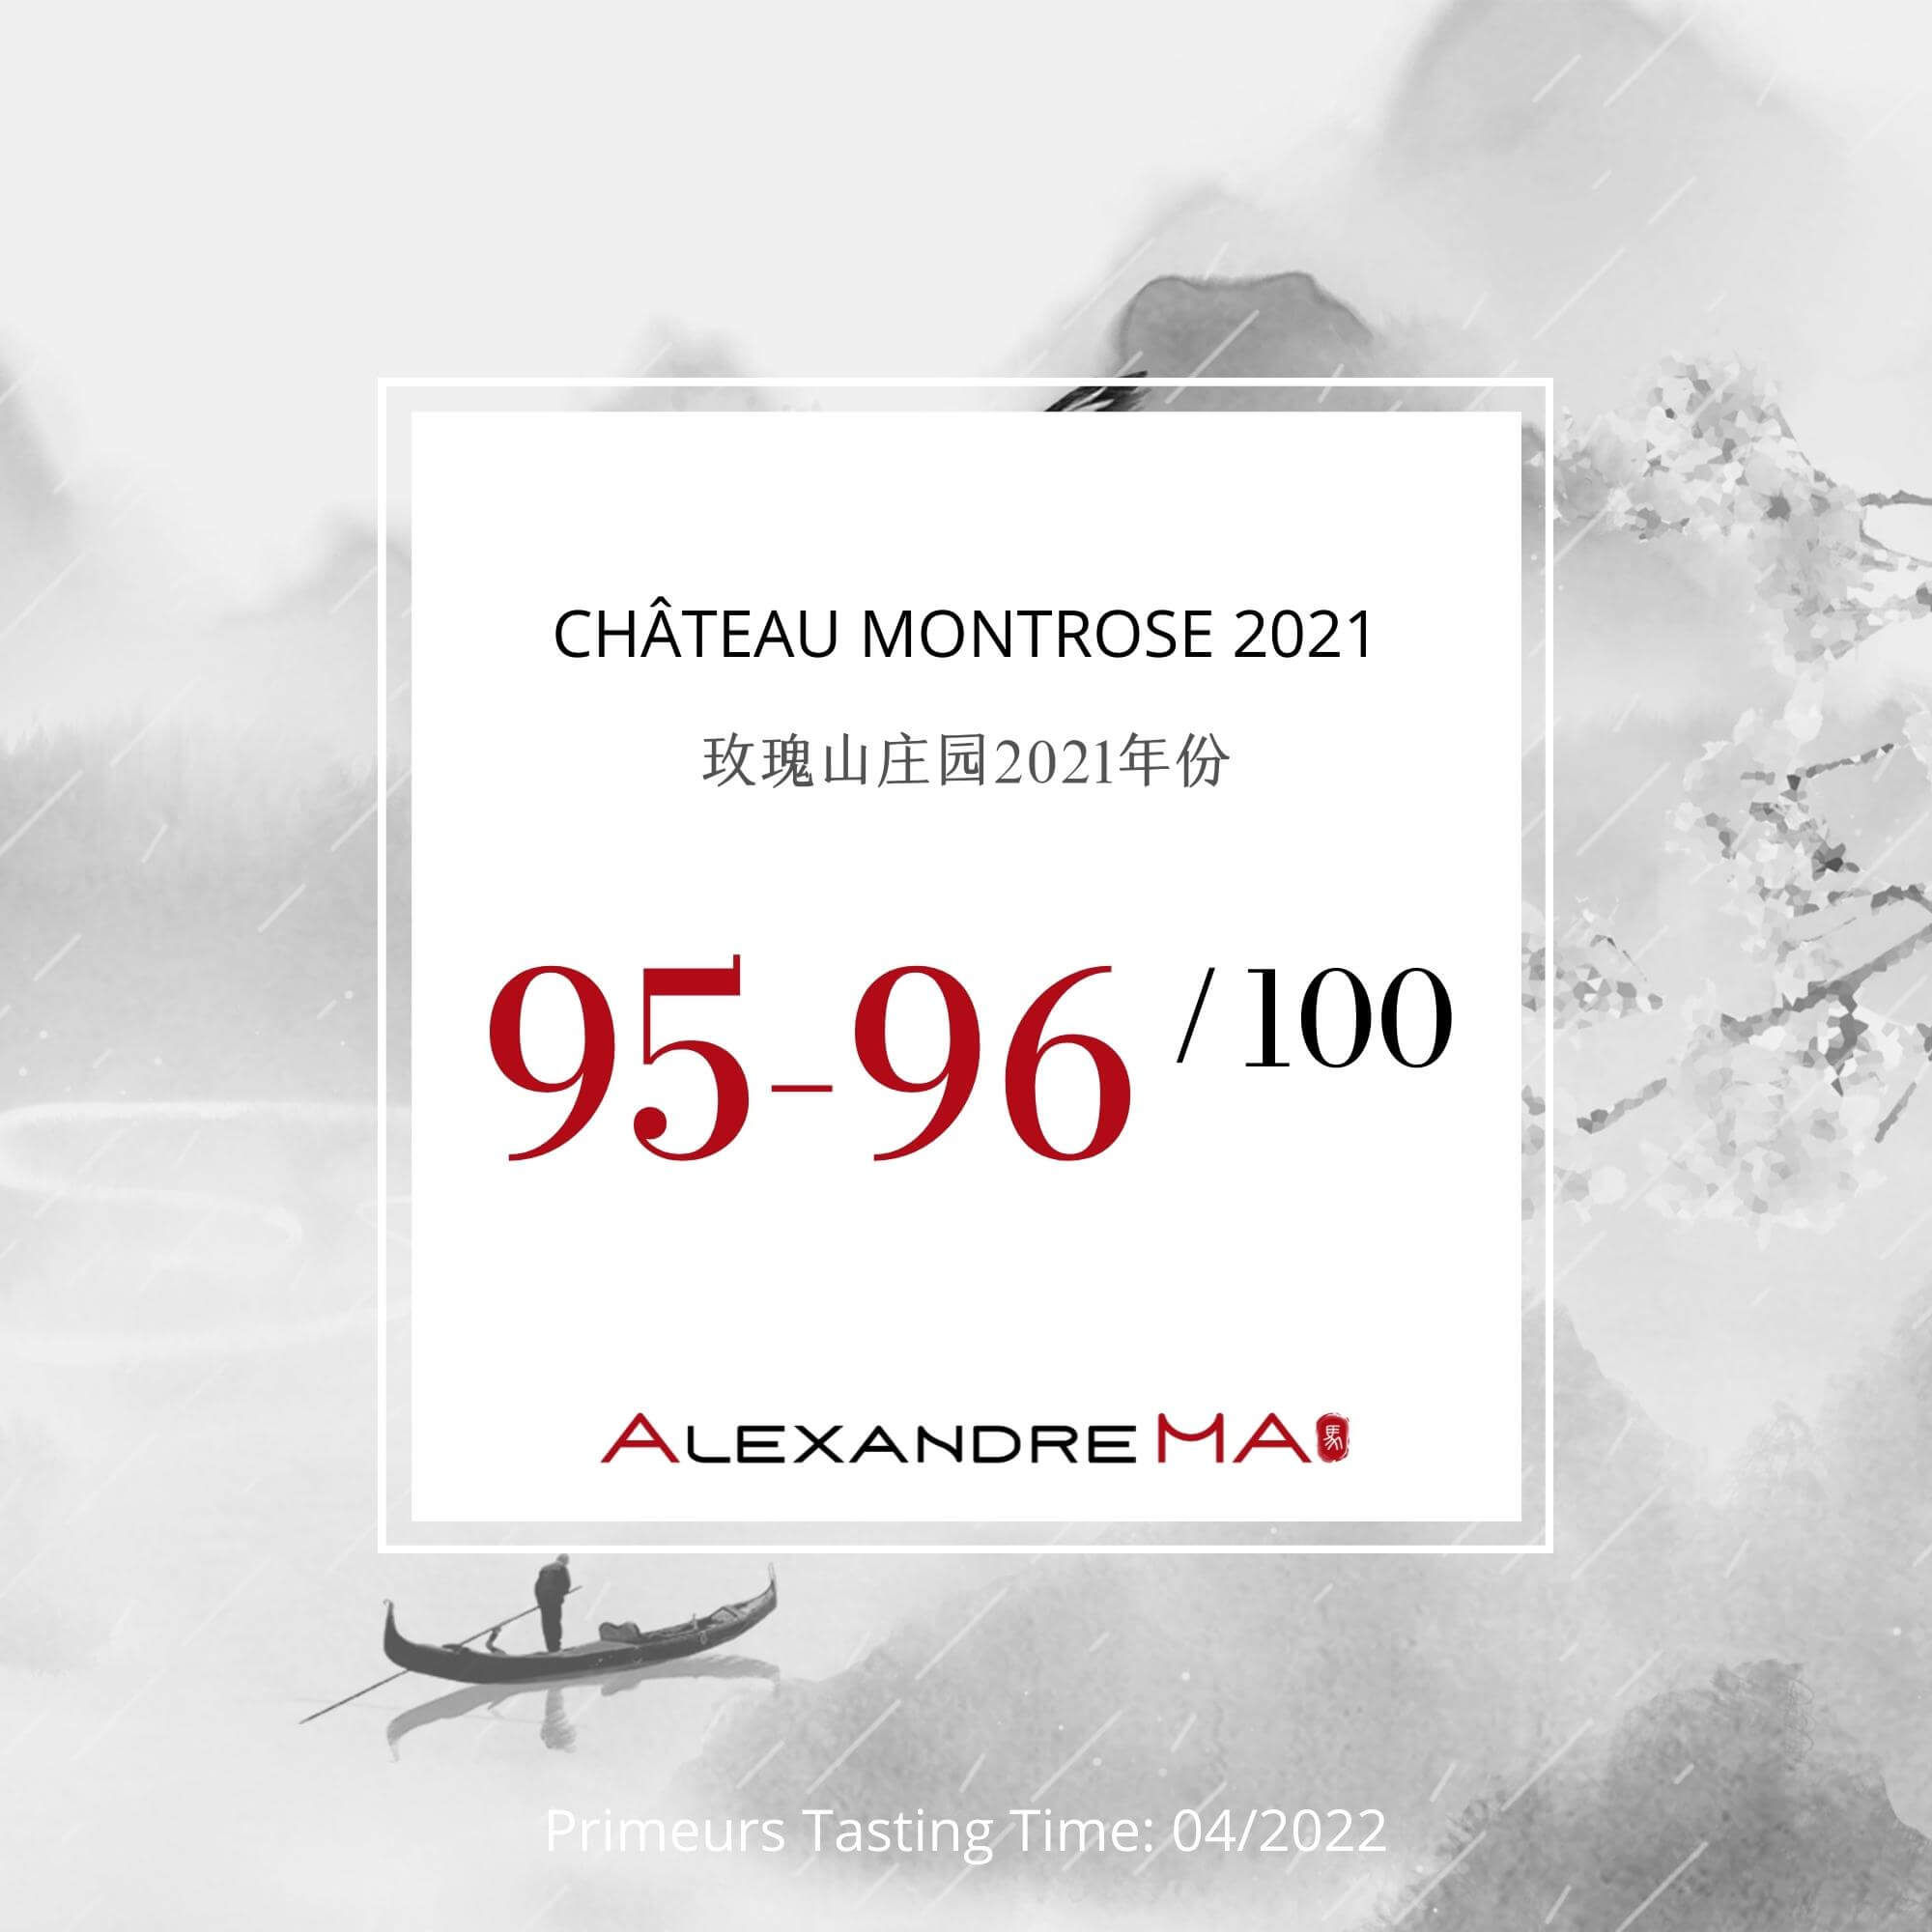 Château Montrose 2021 玫瑰山庄园 - Alexandre Ma